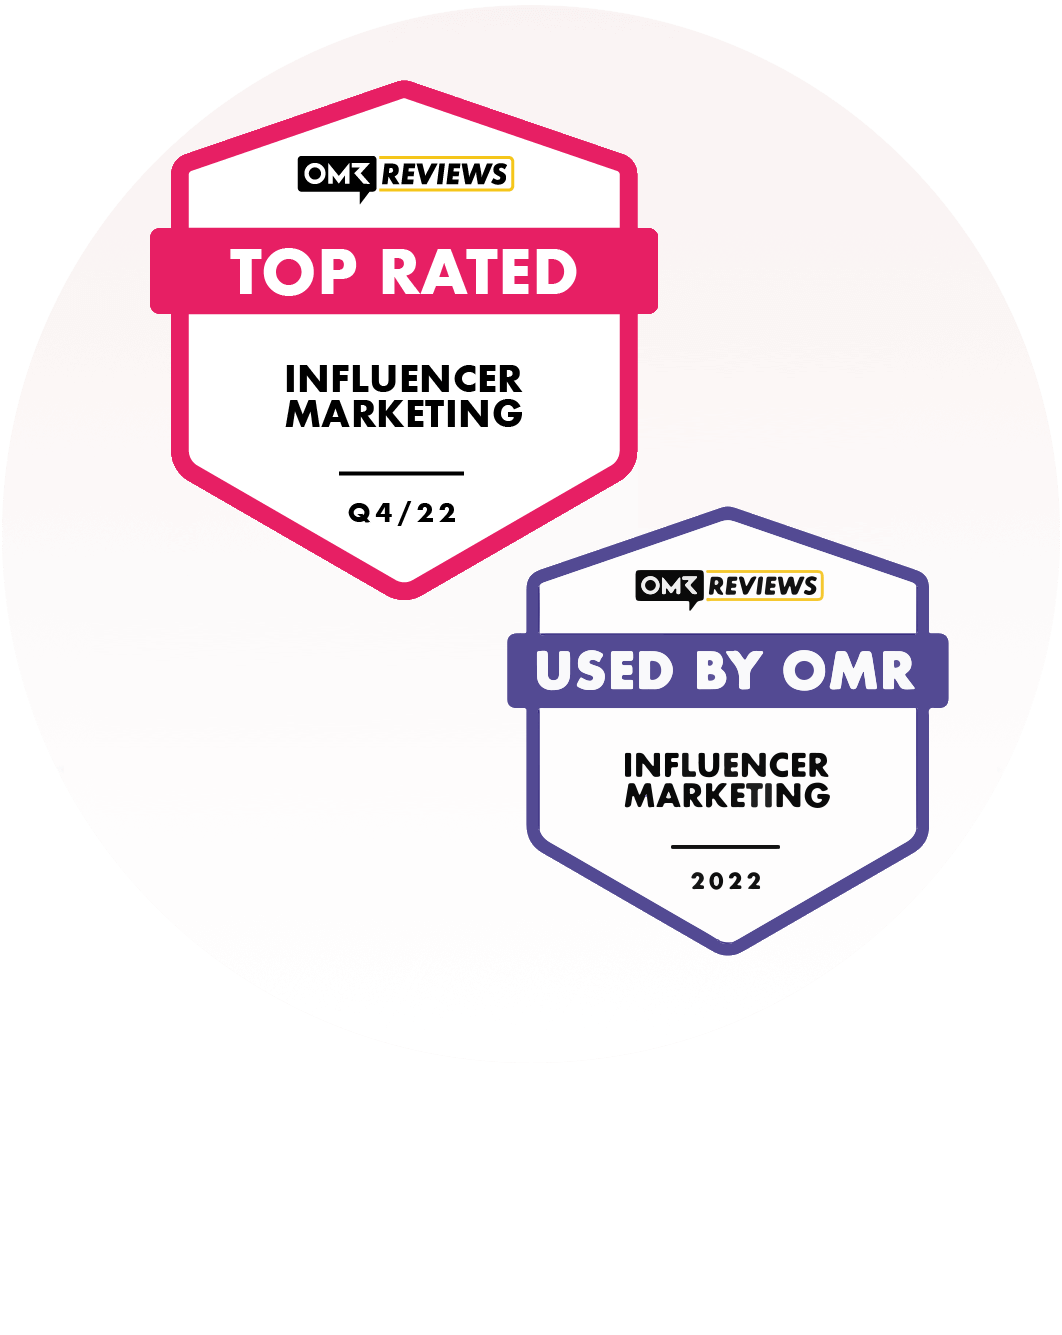 OMR Top Rated Influencer-Marekting Tool und Used by OMR Badge für influData